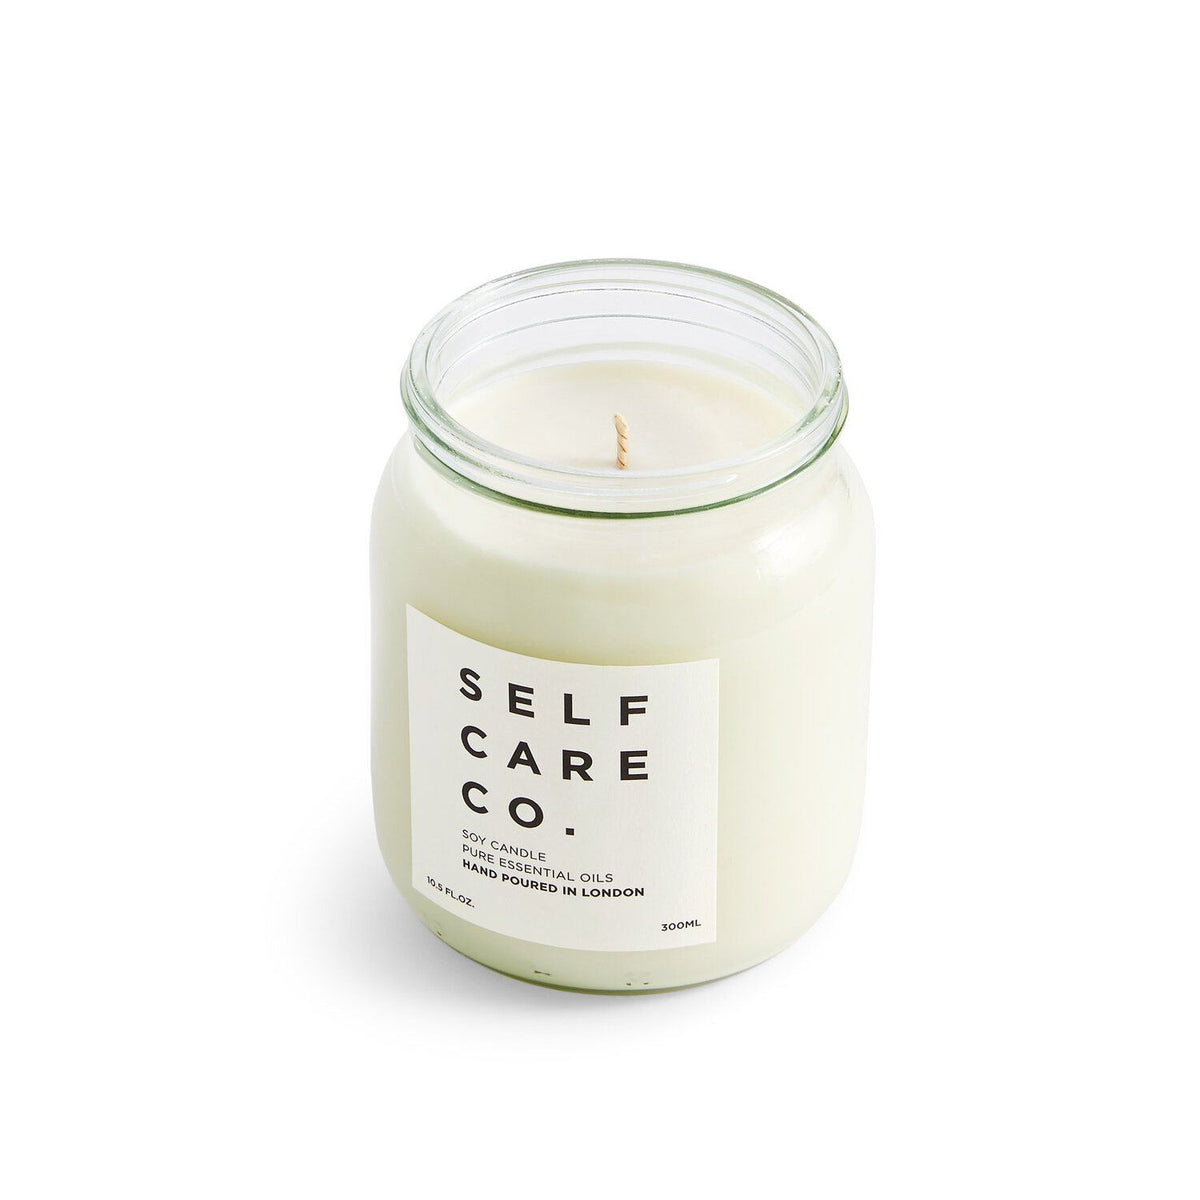 Vetiver, Cedarwood + Bergamot Aromatherapy Candle Kerzen Self Care Co. - Genuine Selection